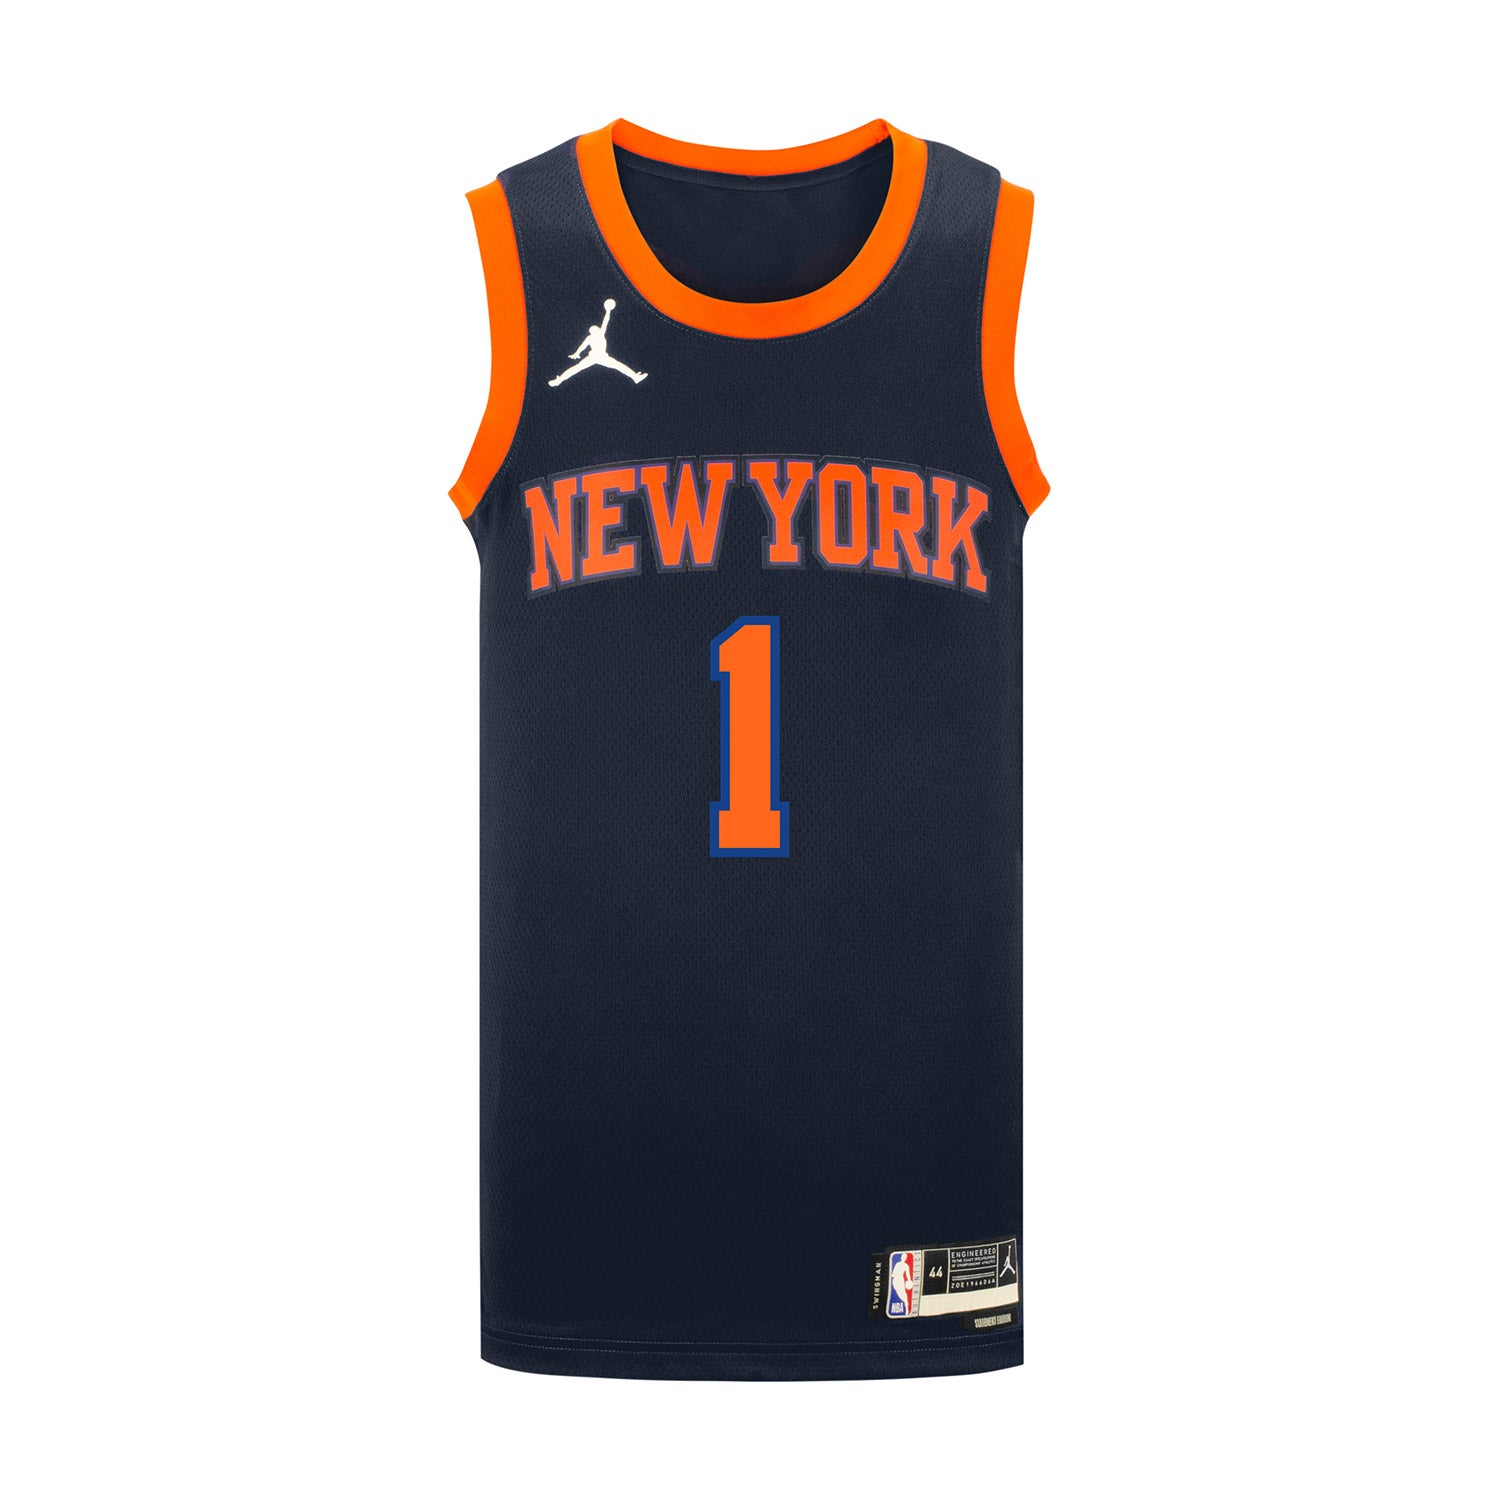 Nike Kids' New York Knicks Julius Randle #30 Blue Swingman Jersey, Boys', Large